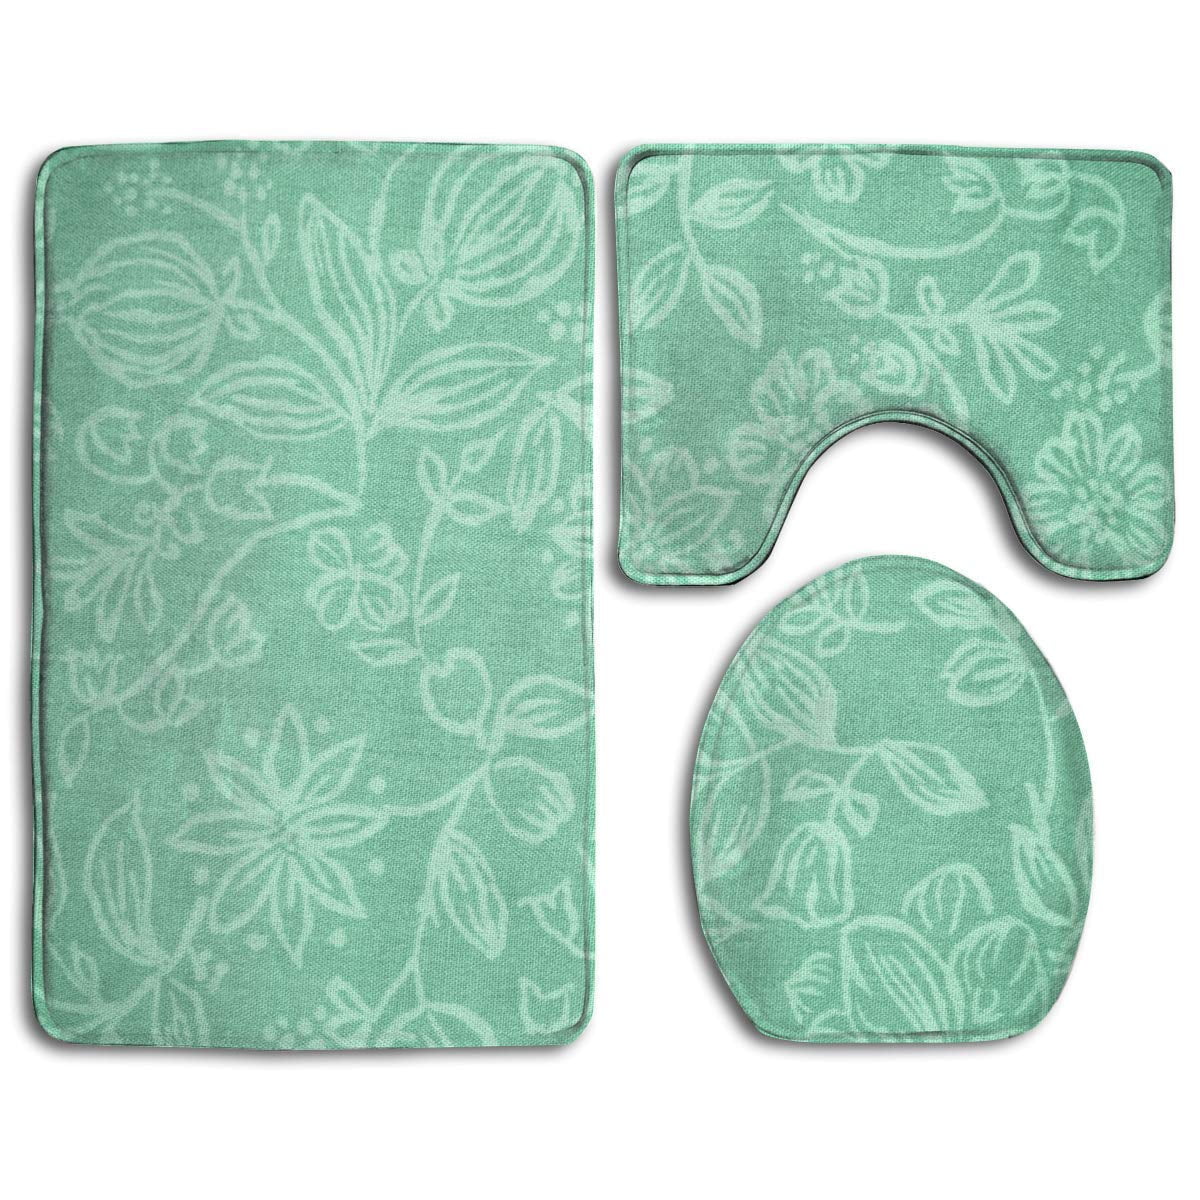 Gohao Mint Green Flowers 3 Piece, Decorative Bathroom Rugs